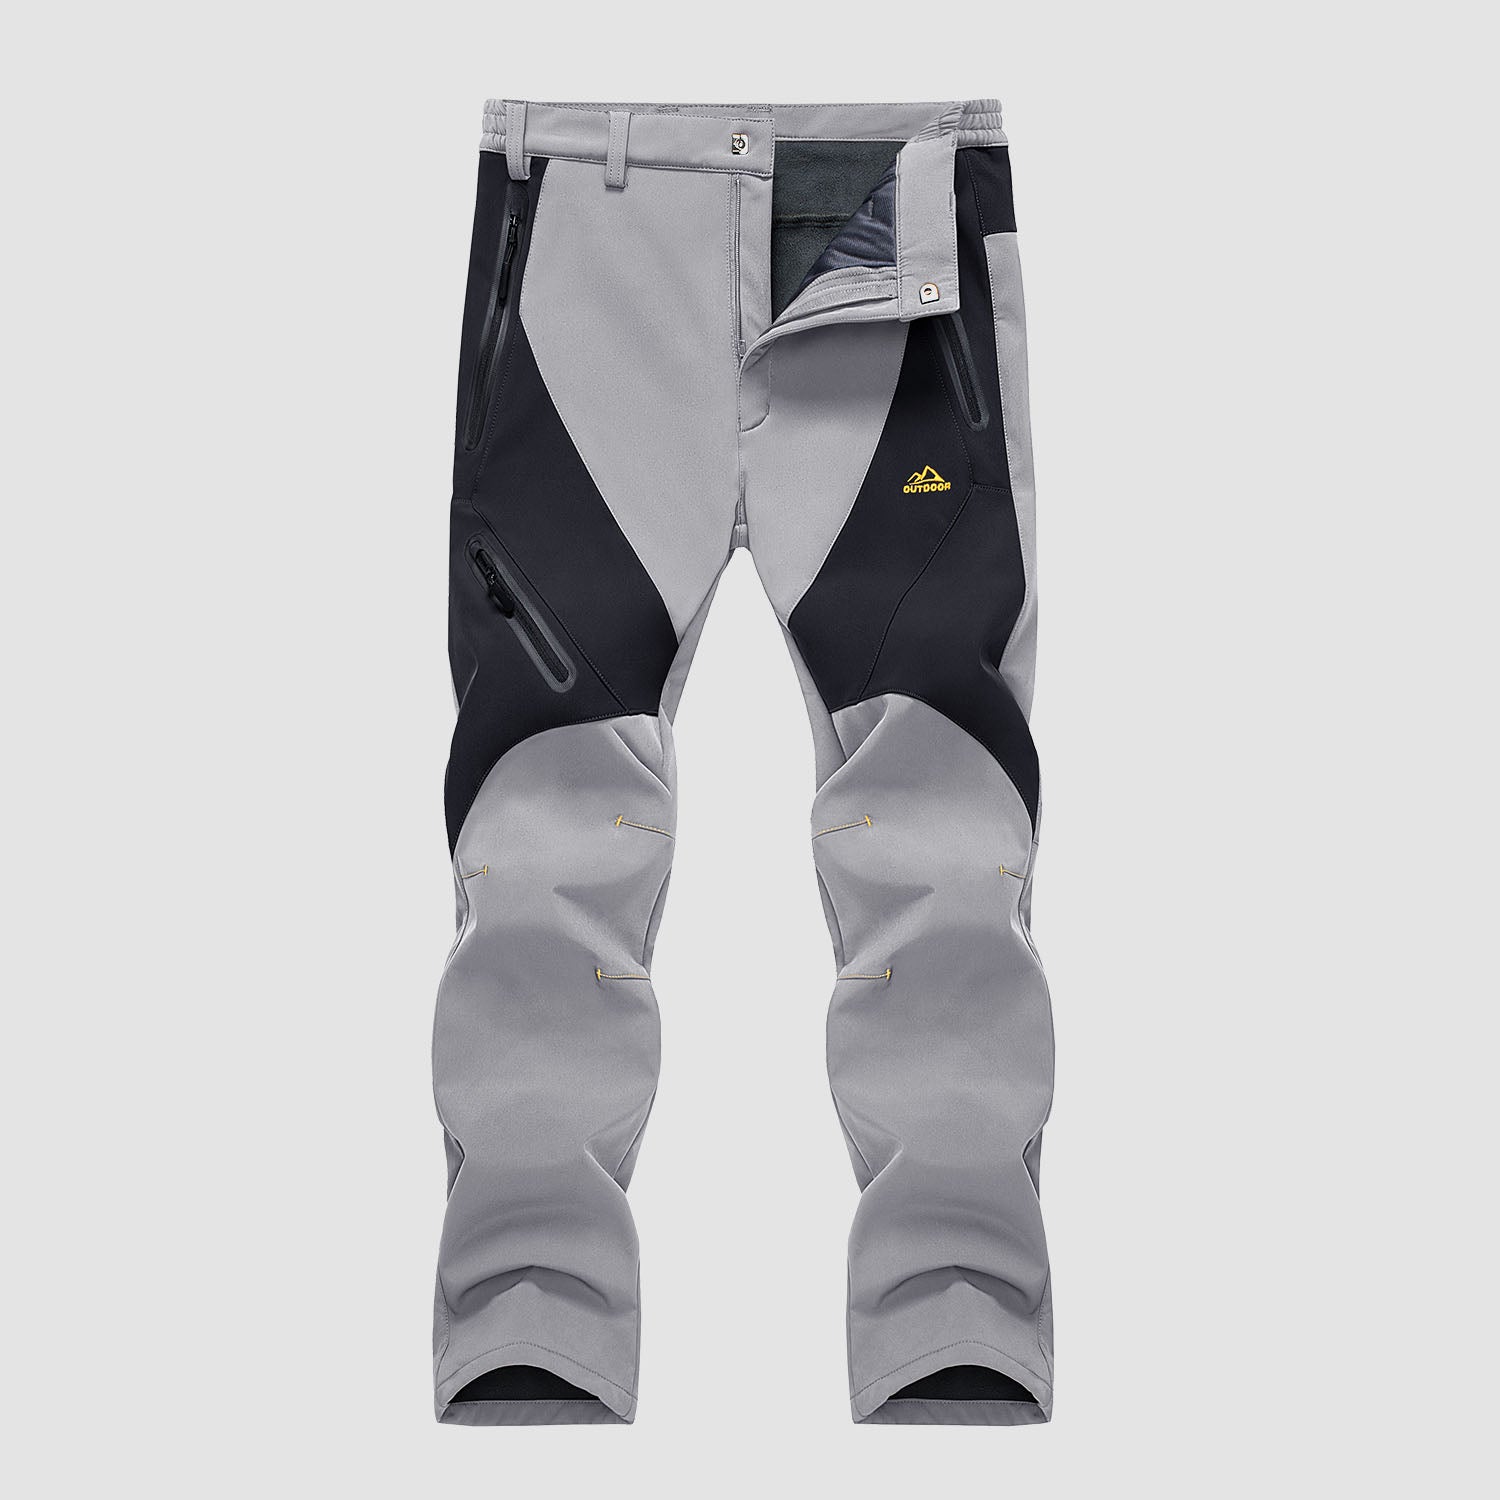 MAGCOMSEN Men's Hiking Pants 6 Pockets,Water Resistant Ripstop Outdoor Pants,Lightweight Quick Dry Fishing Work Pants